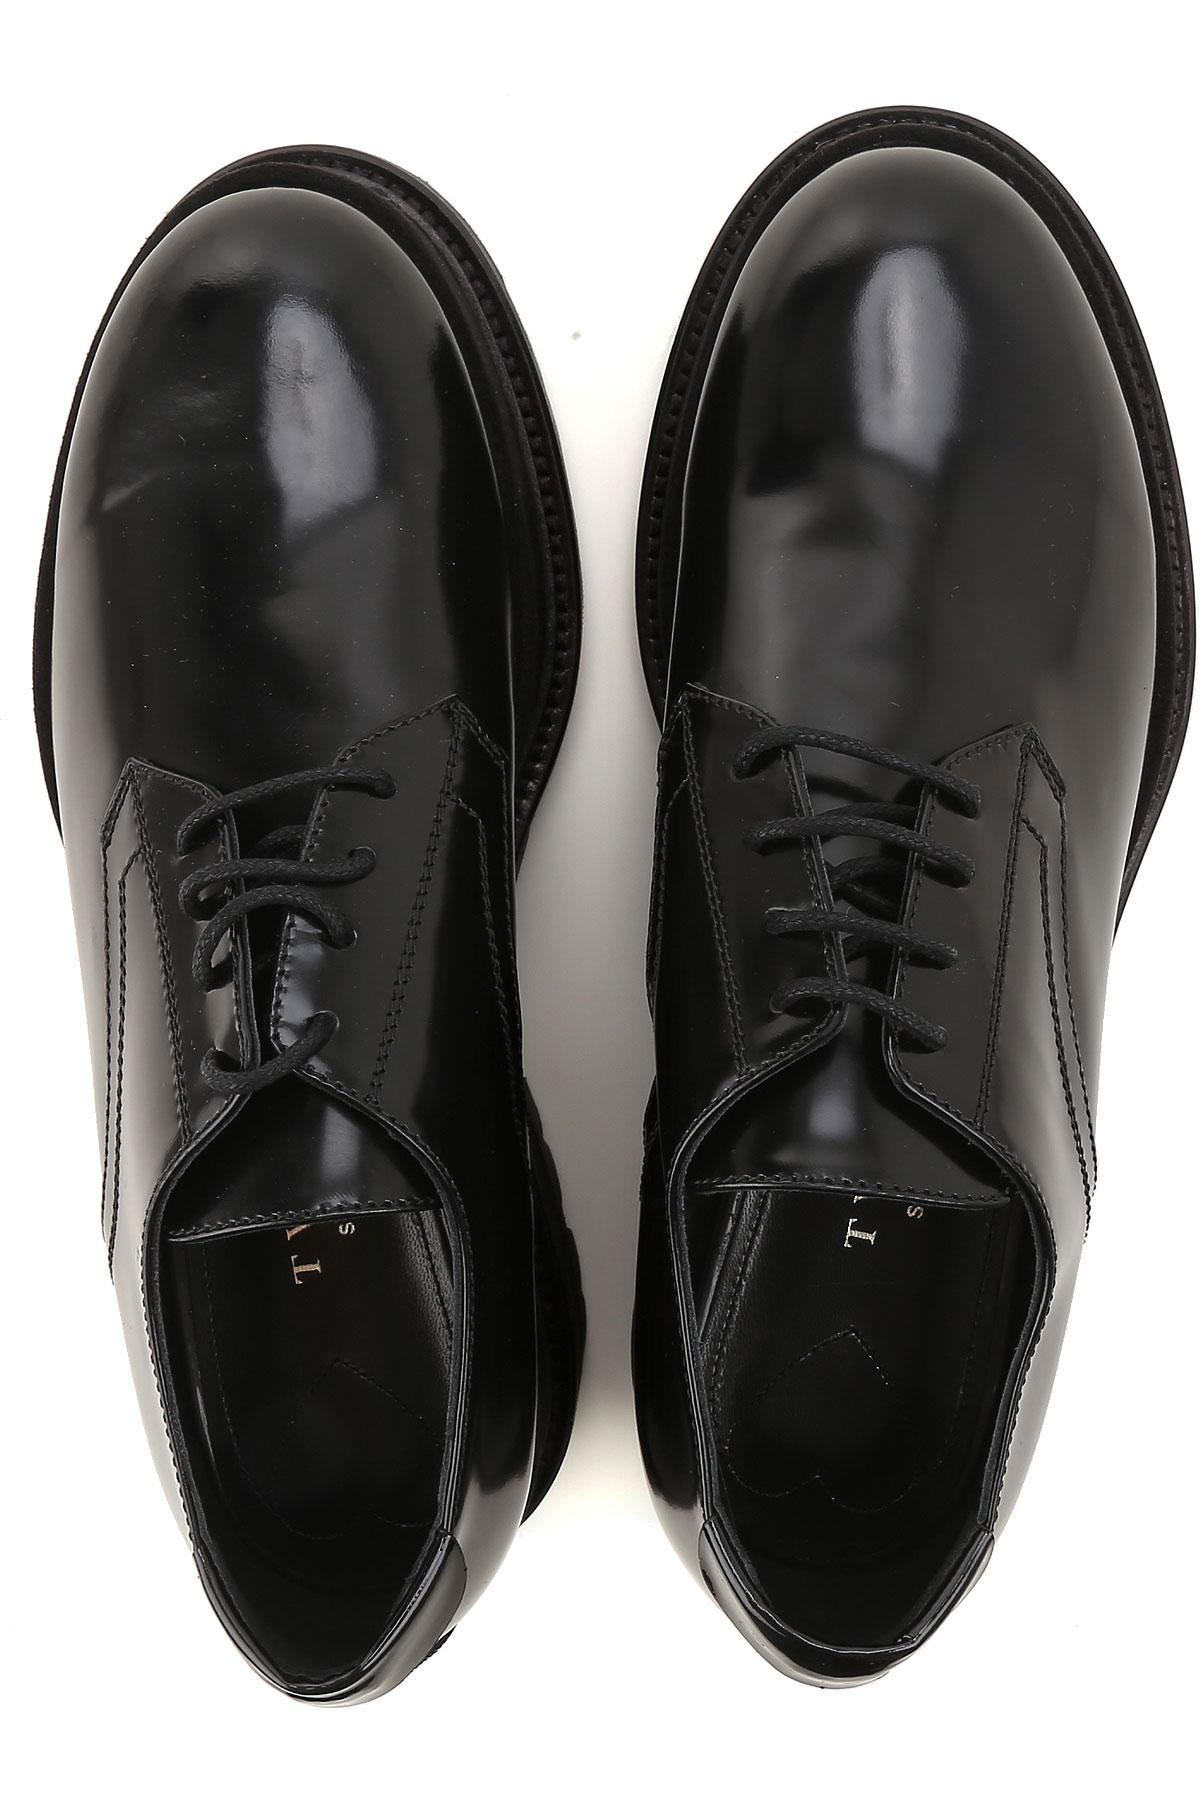 Lyst - Twin Set Shoes For Women in Black